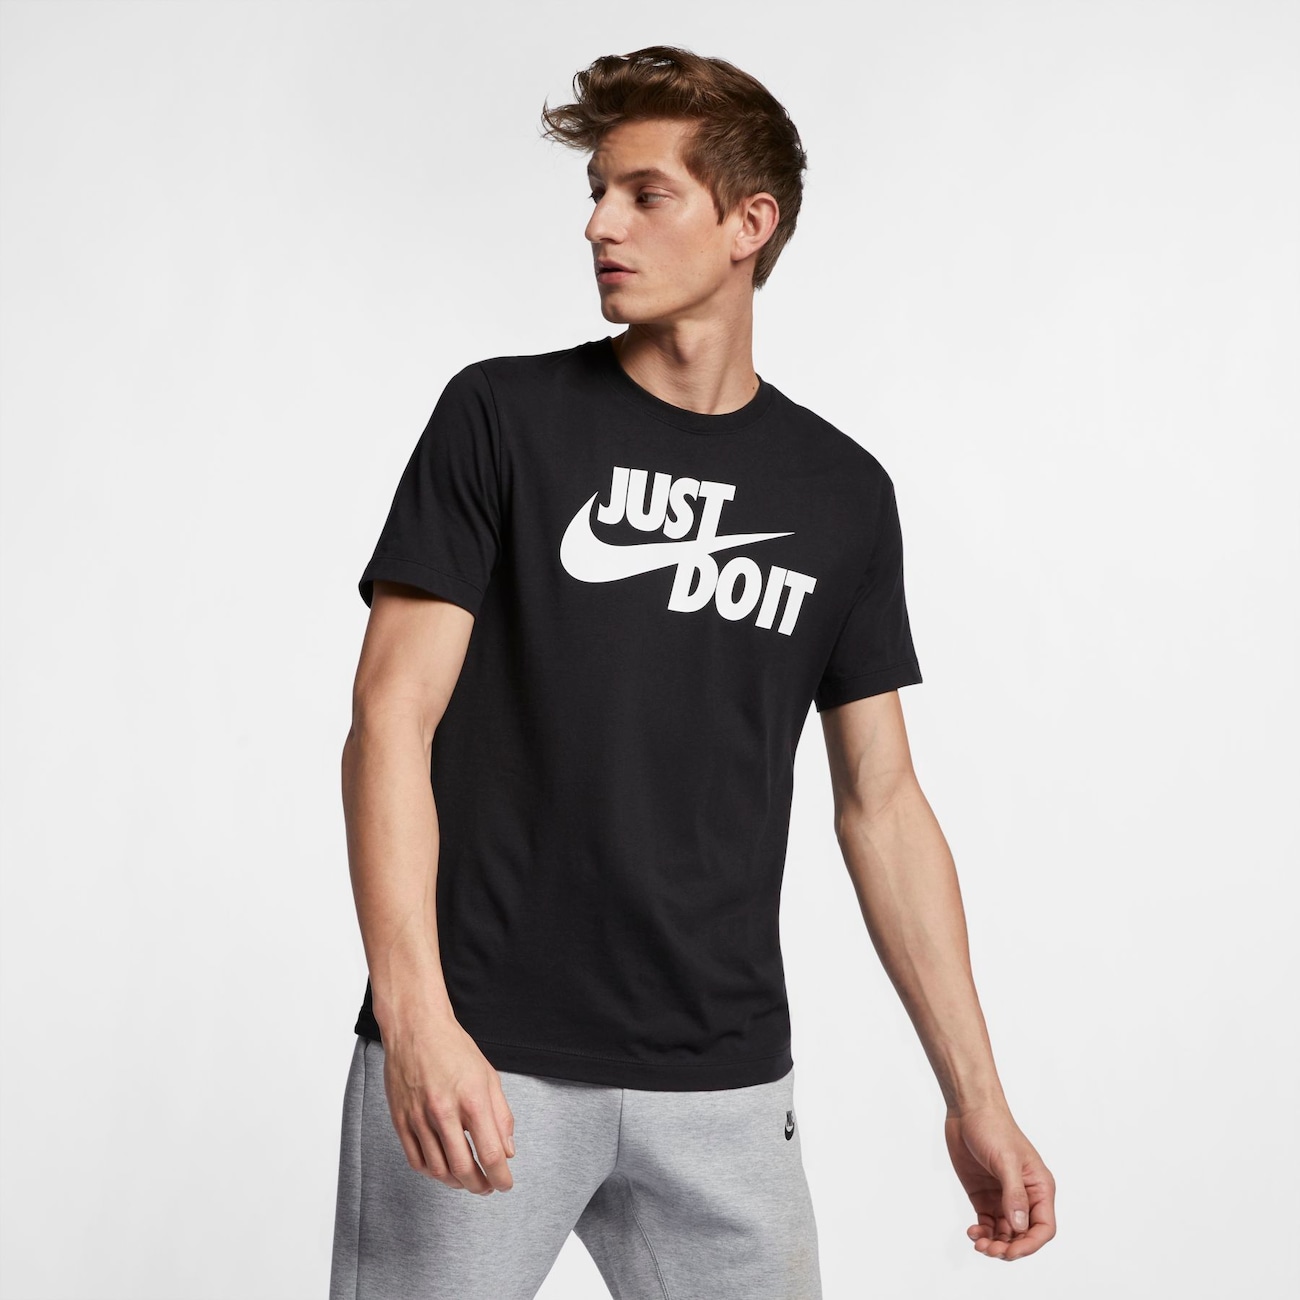 Camiseta Nike Sportswear Just Do It Masculina